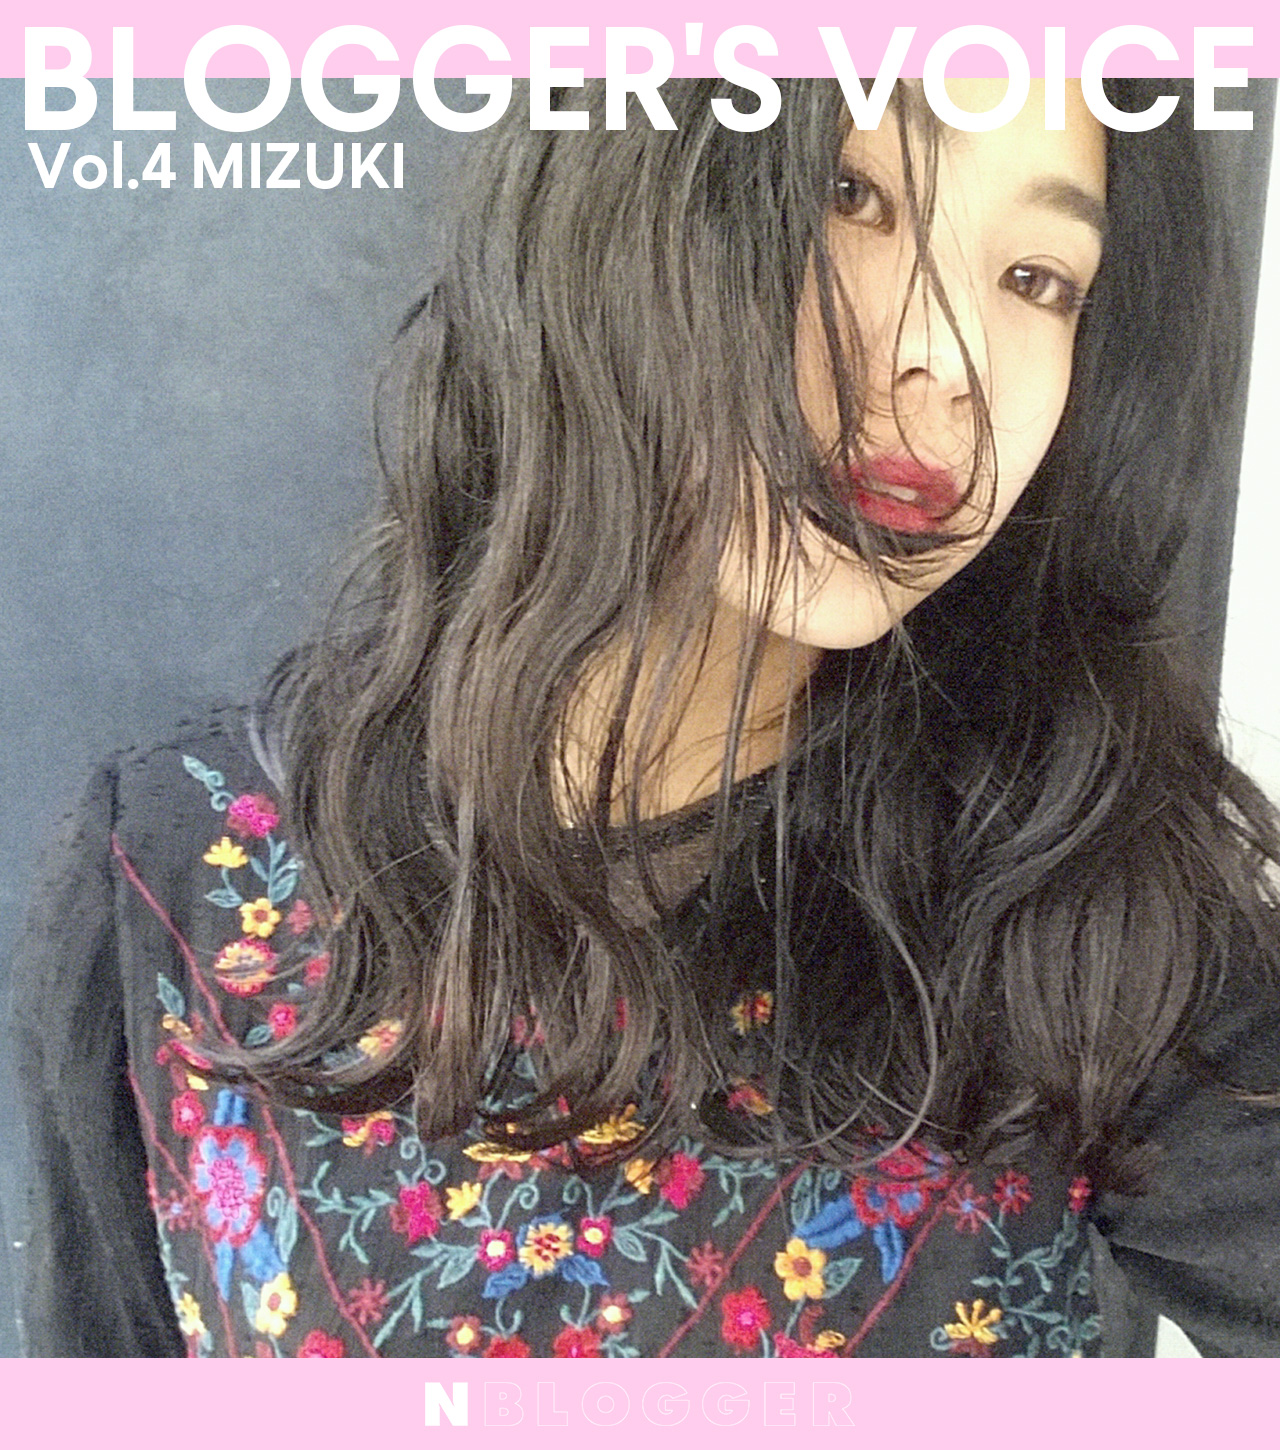 NYLONブロガー6期オーディションスペシャルコンテンツ　 現役ブロガーが語るNYLONブロガーの魅力 Vol.4 mizuki